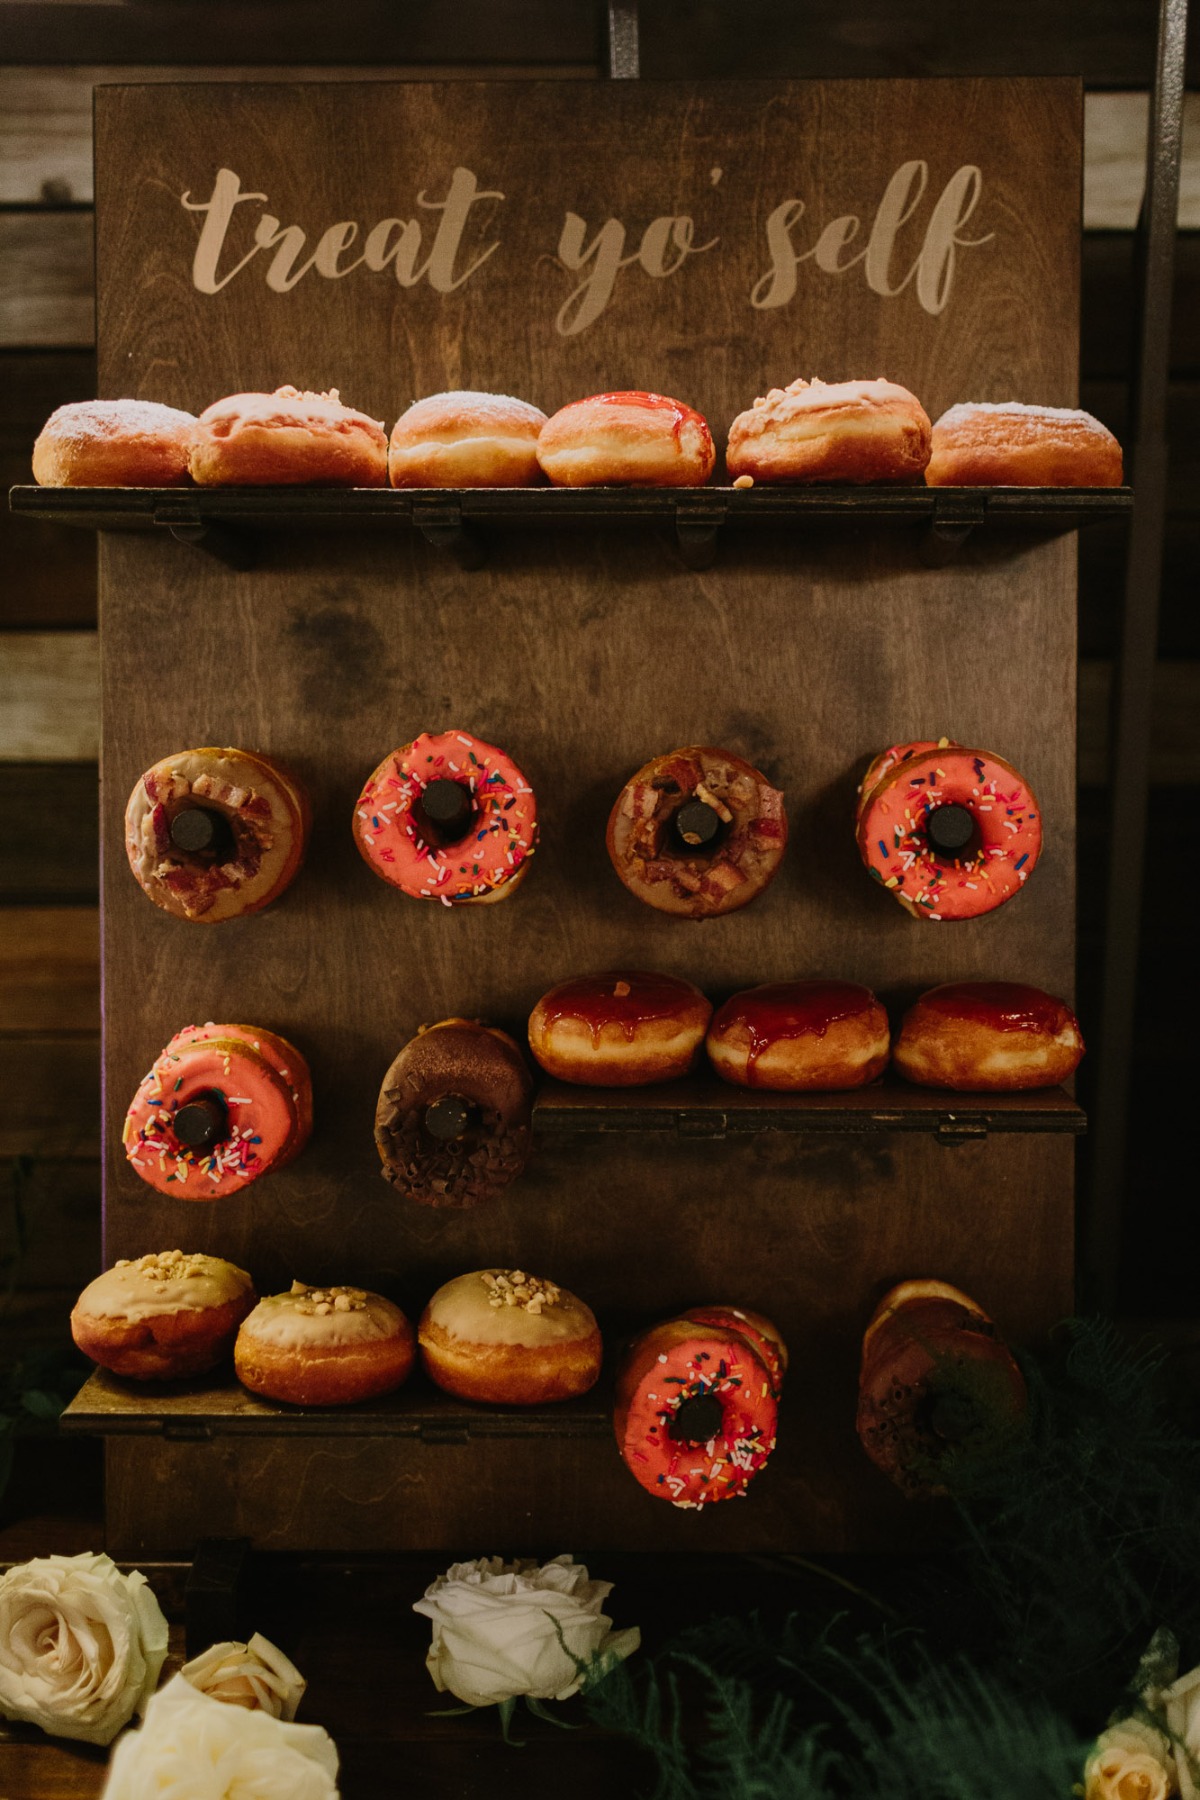 Donut wall "treat yo